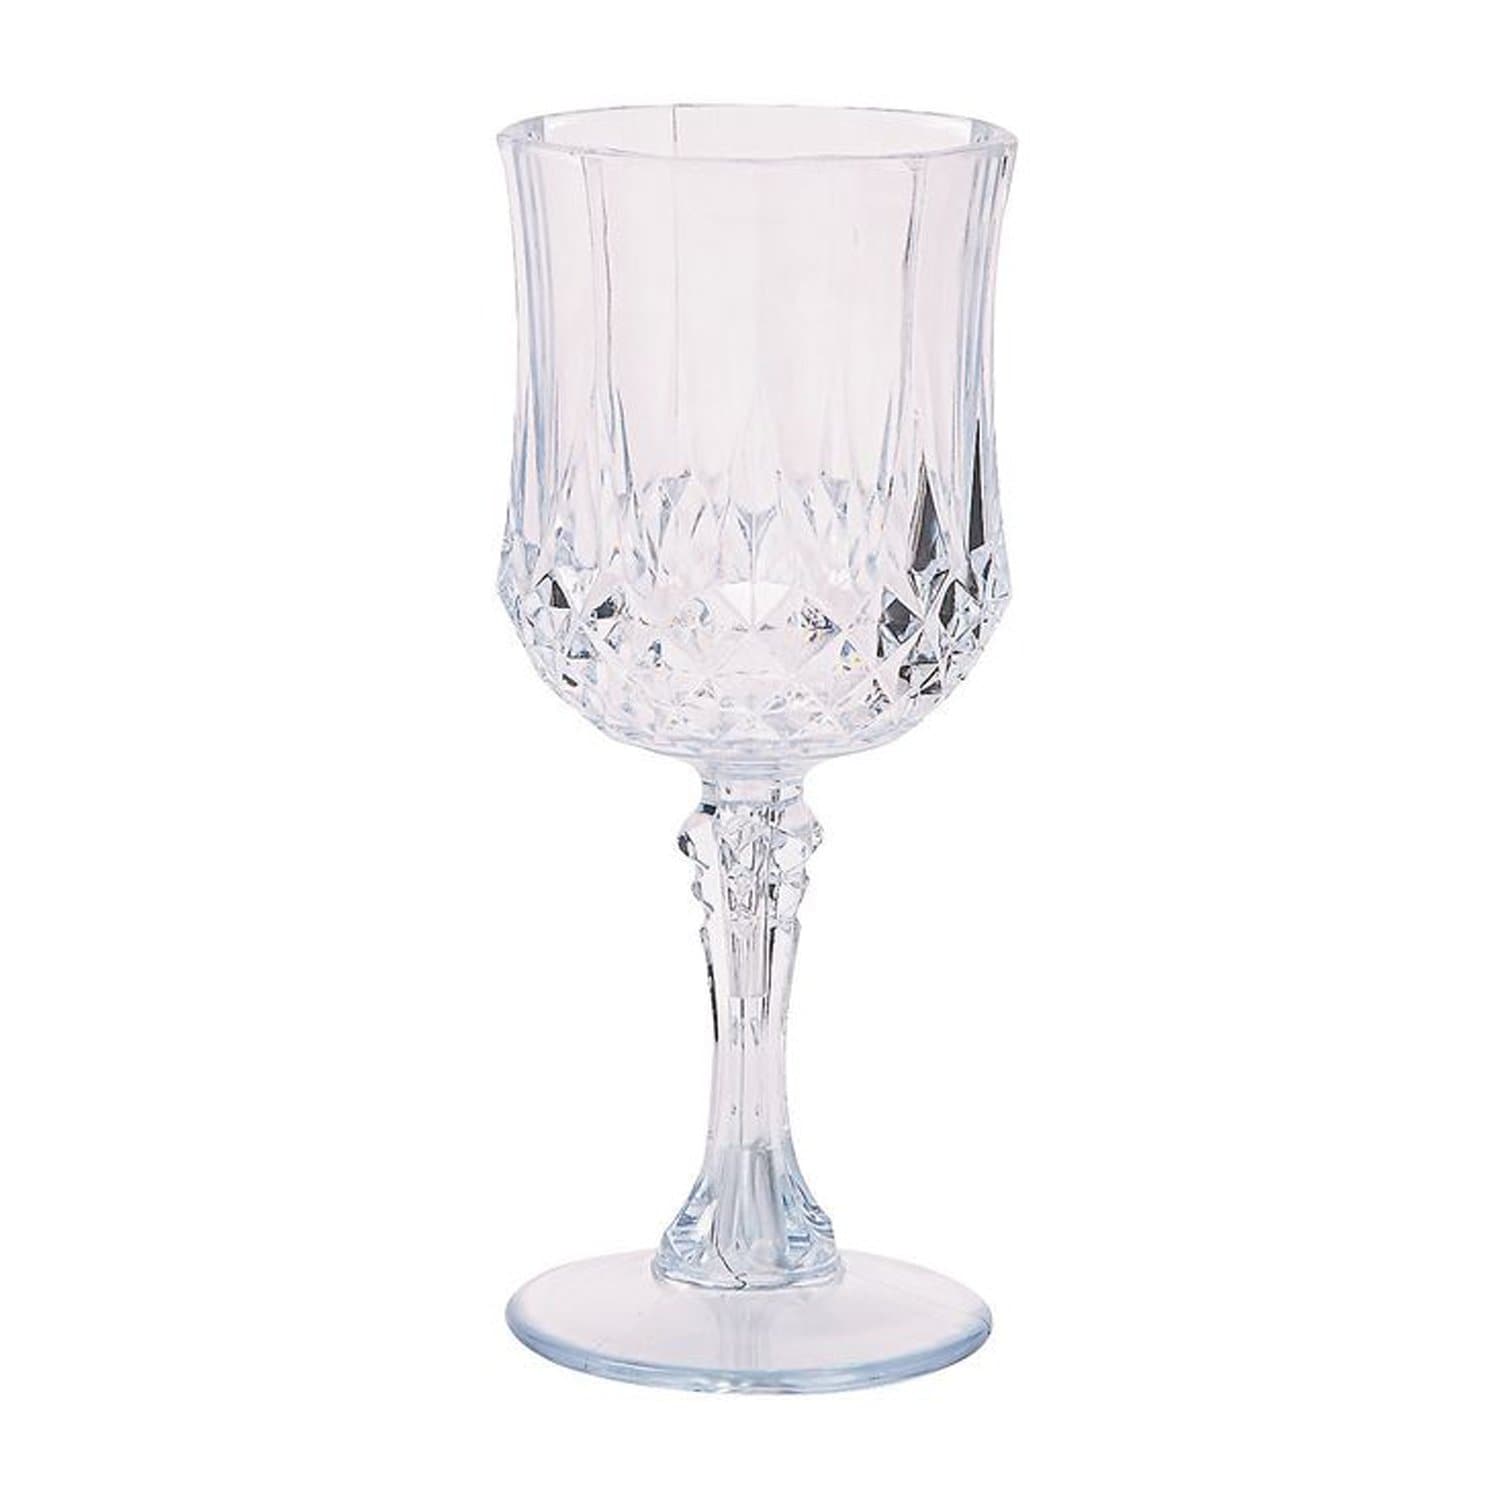 SOOMILE Crystal Drinking Glasses, U-shaped Ribbed